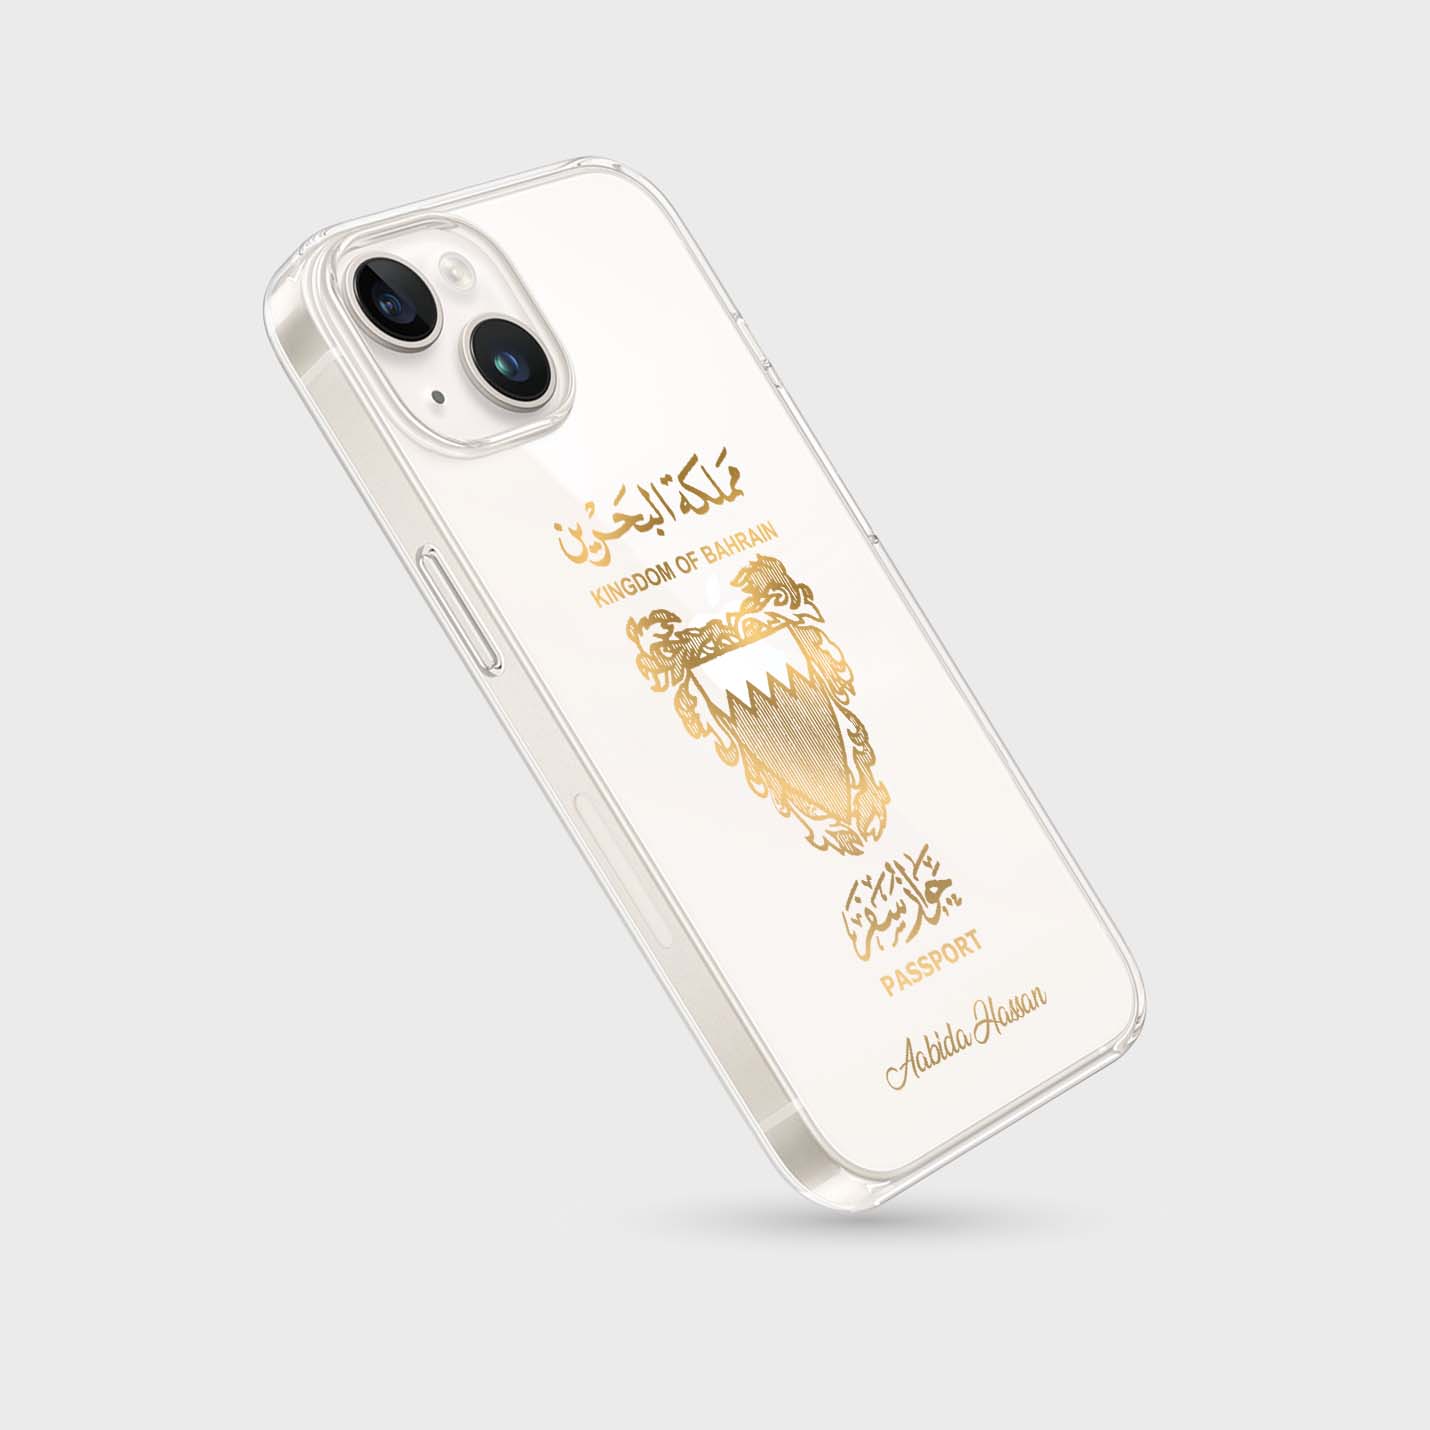 Handyhüllen mit Reisepass - Bahrain - 1instaphone